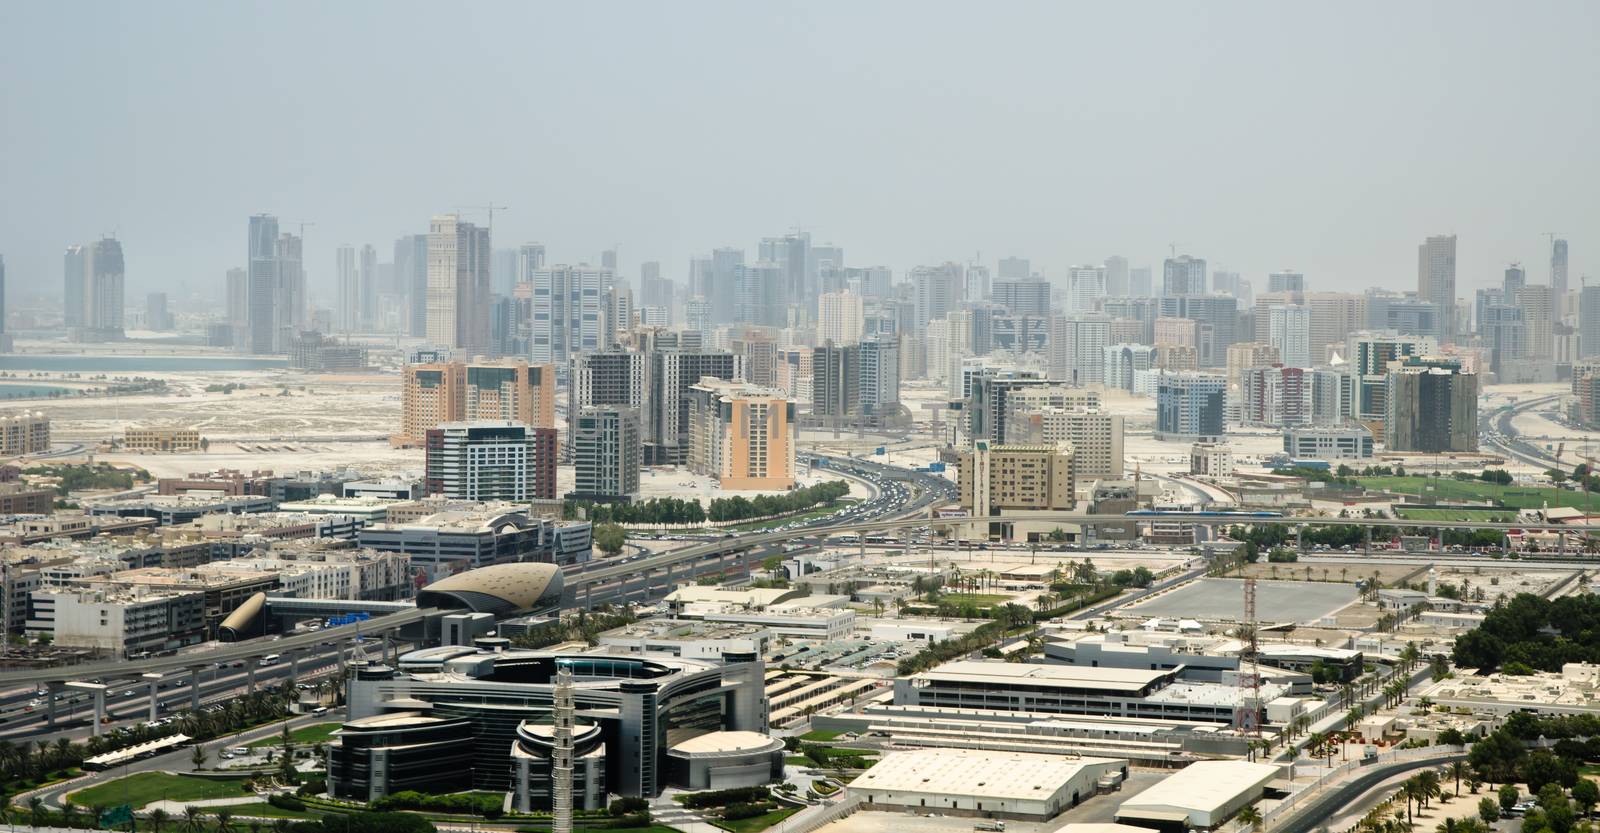 Dubai city from bird's eye view by nemo269